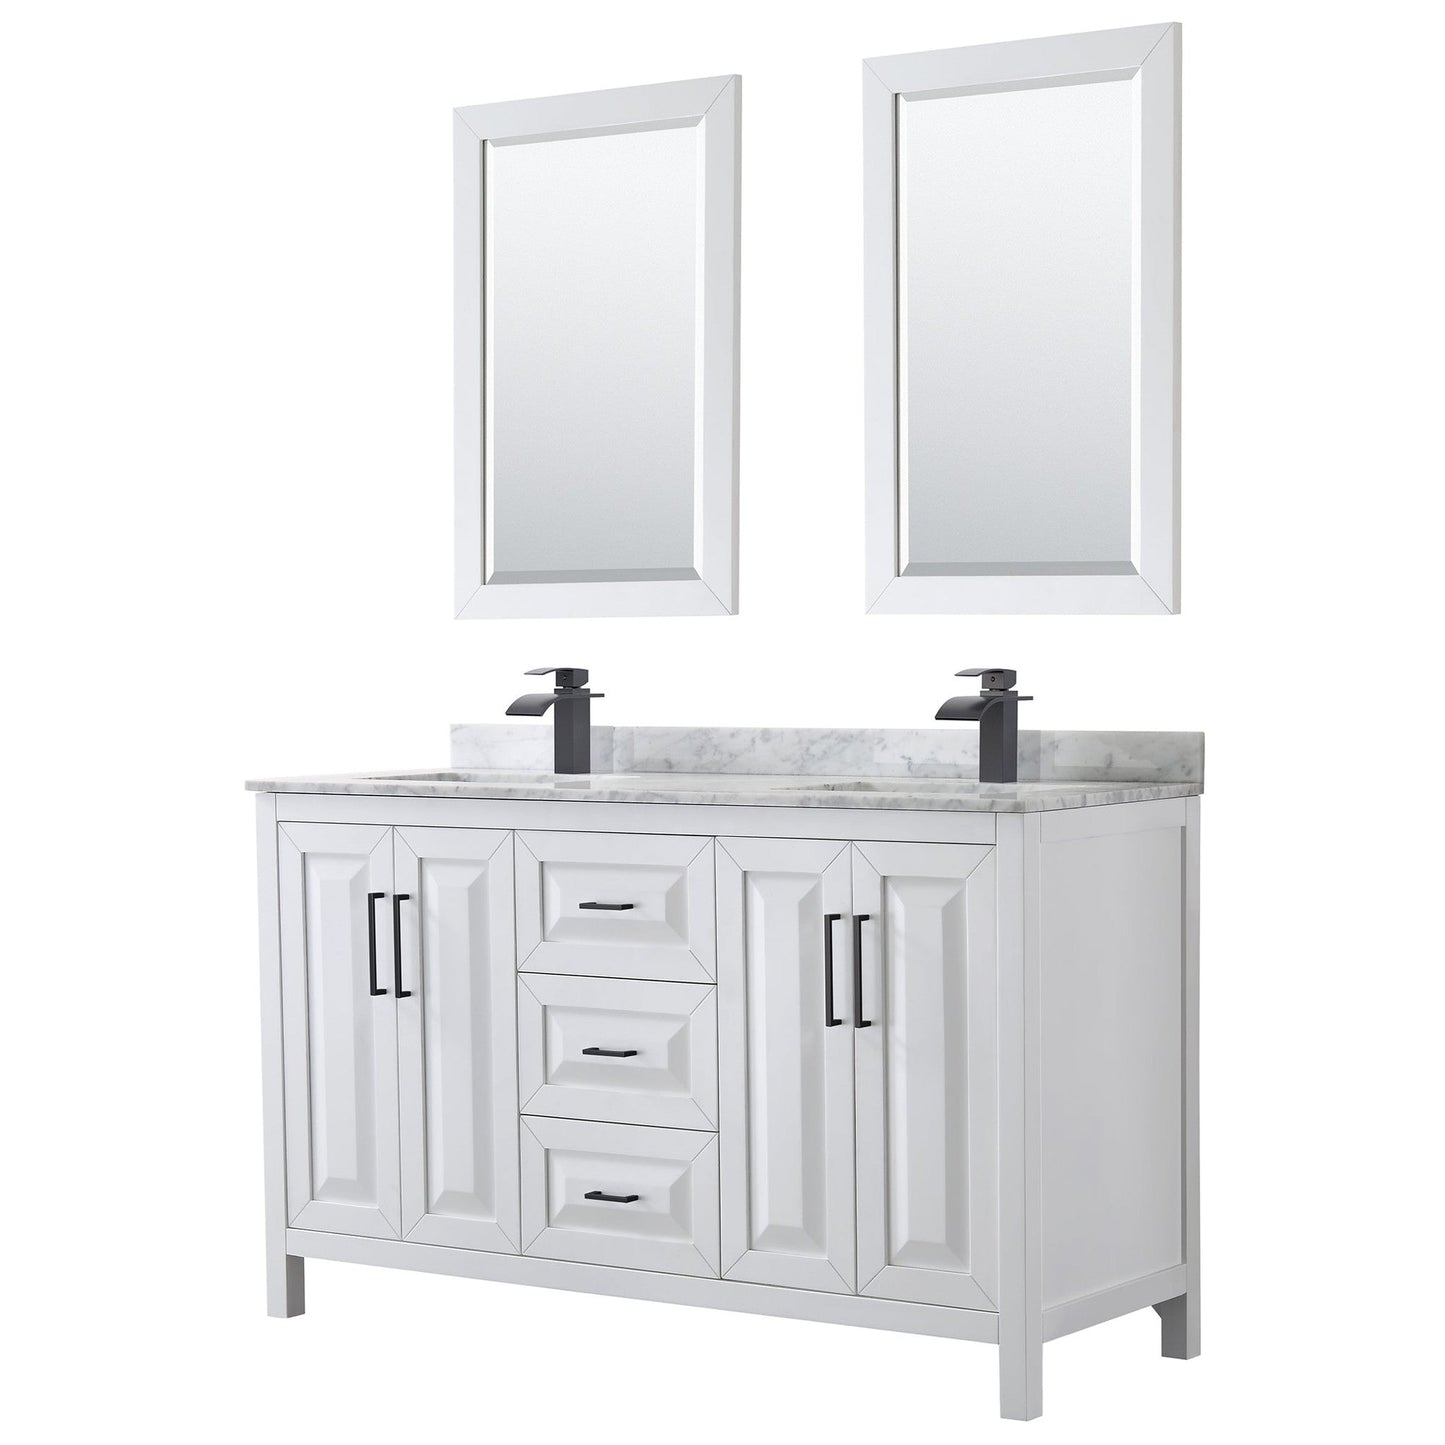 Daria 60" Double Bathroom Vanity in White, White Carrara Marble Countertop, Undermount Square Sinks, Matte Black Trim, 24" Mirrors